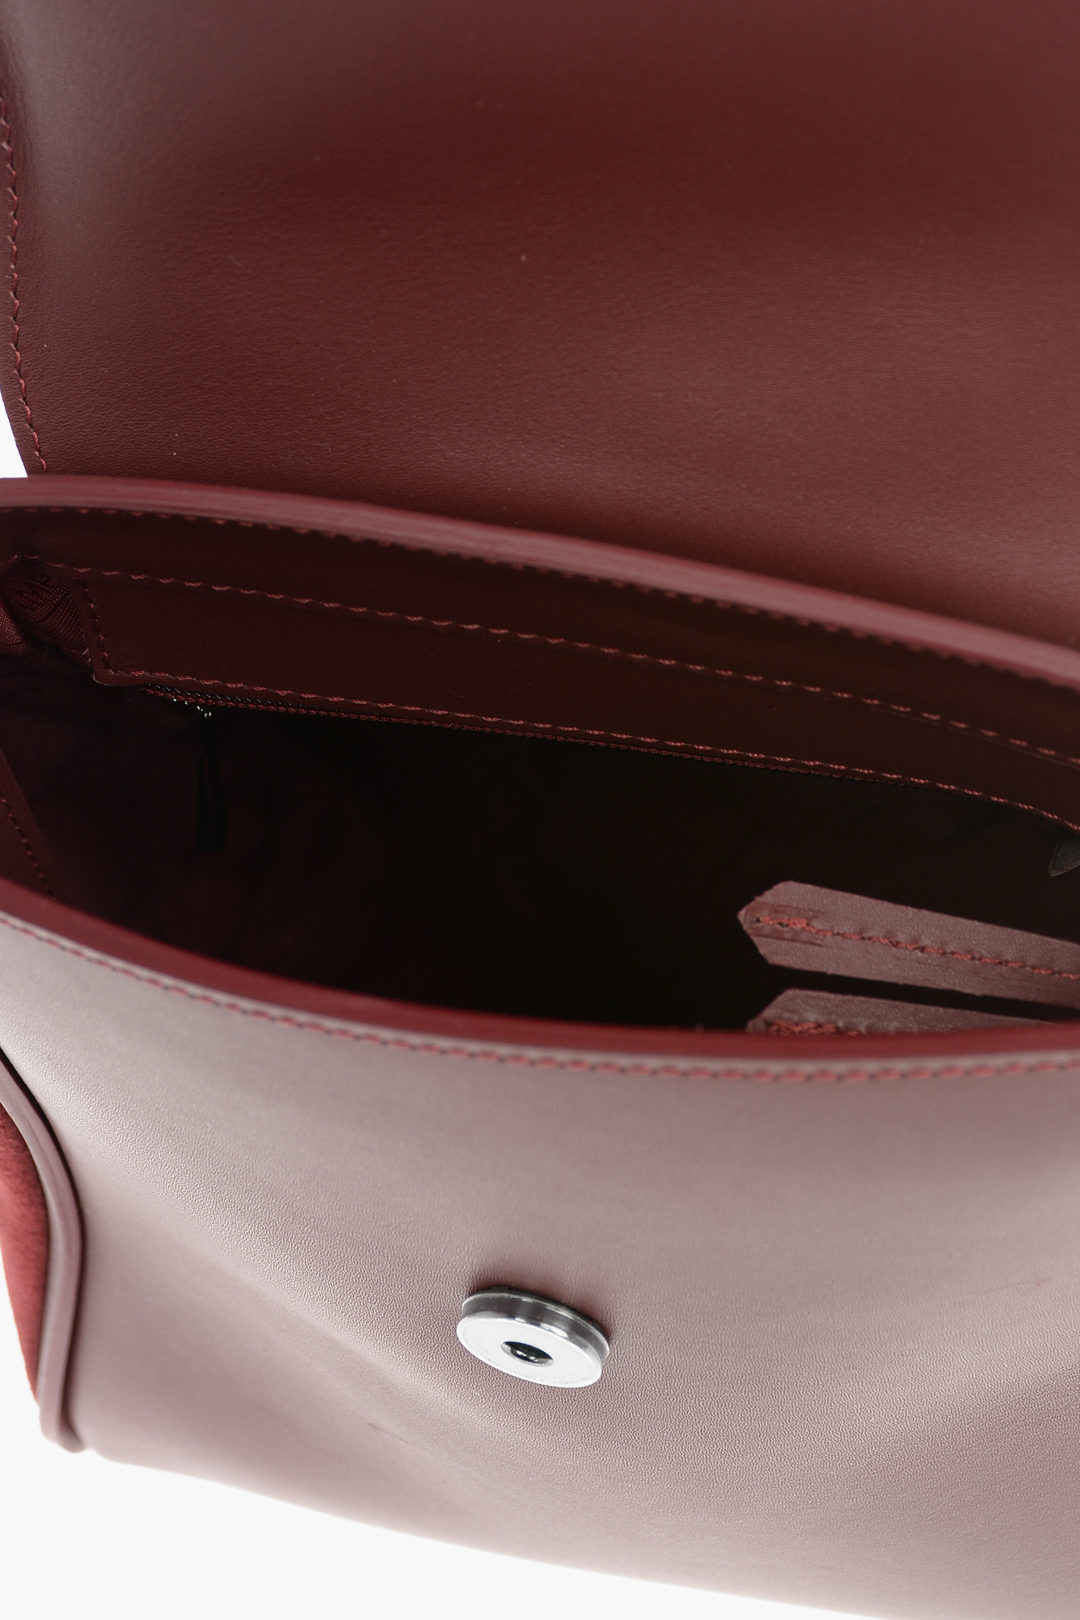 Celine front printed textured leather wallet men - Glamood Outlet